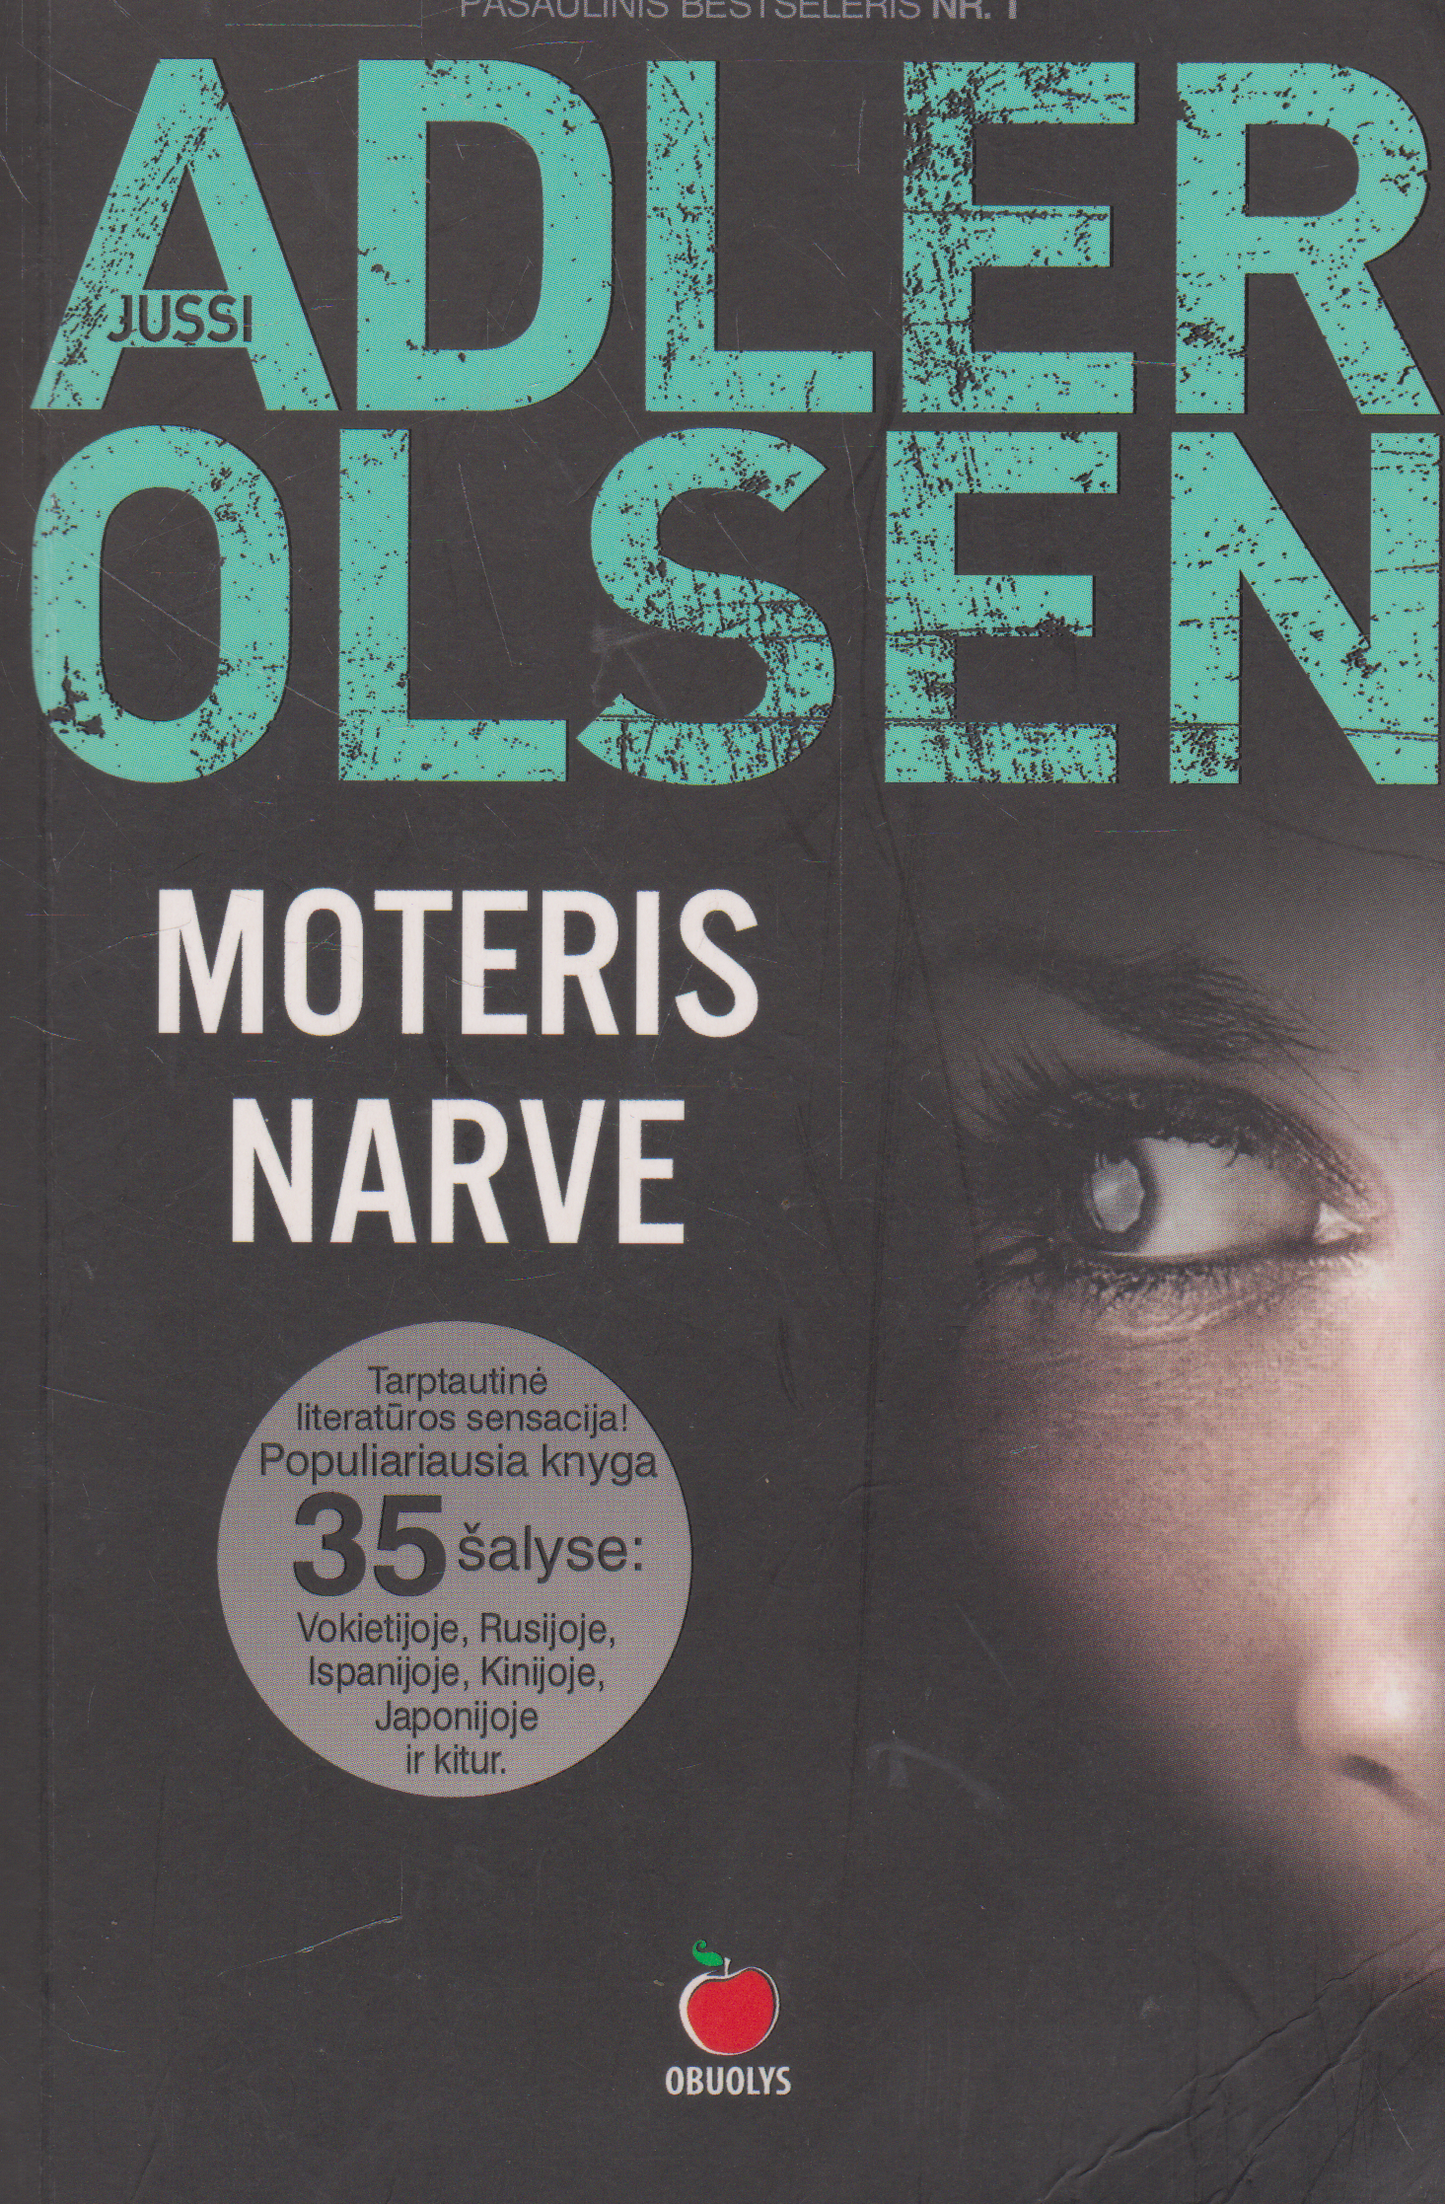 Adler Olsen - Department Q serija (4 knygos)